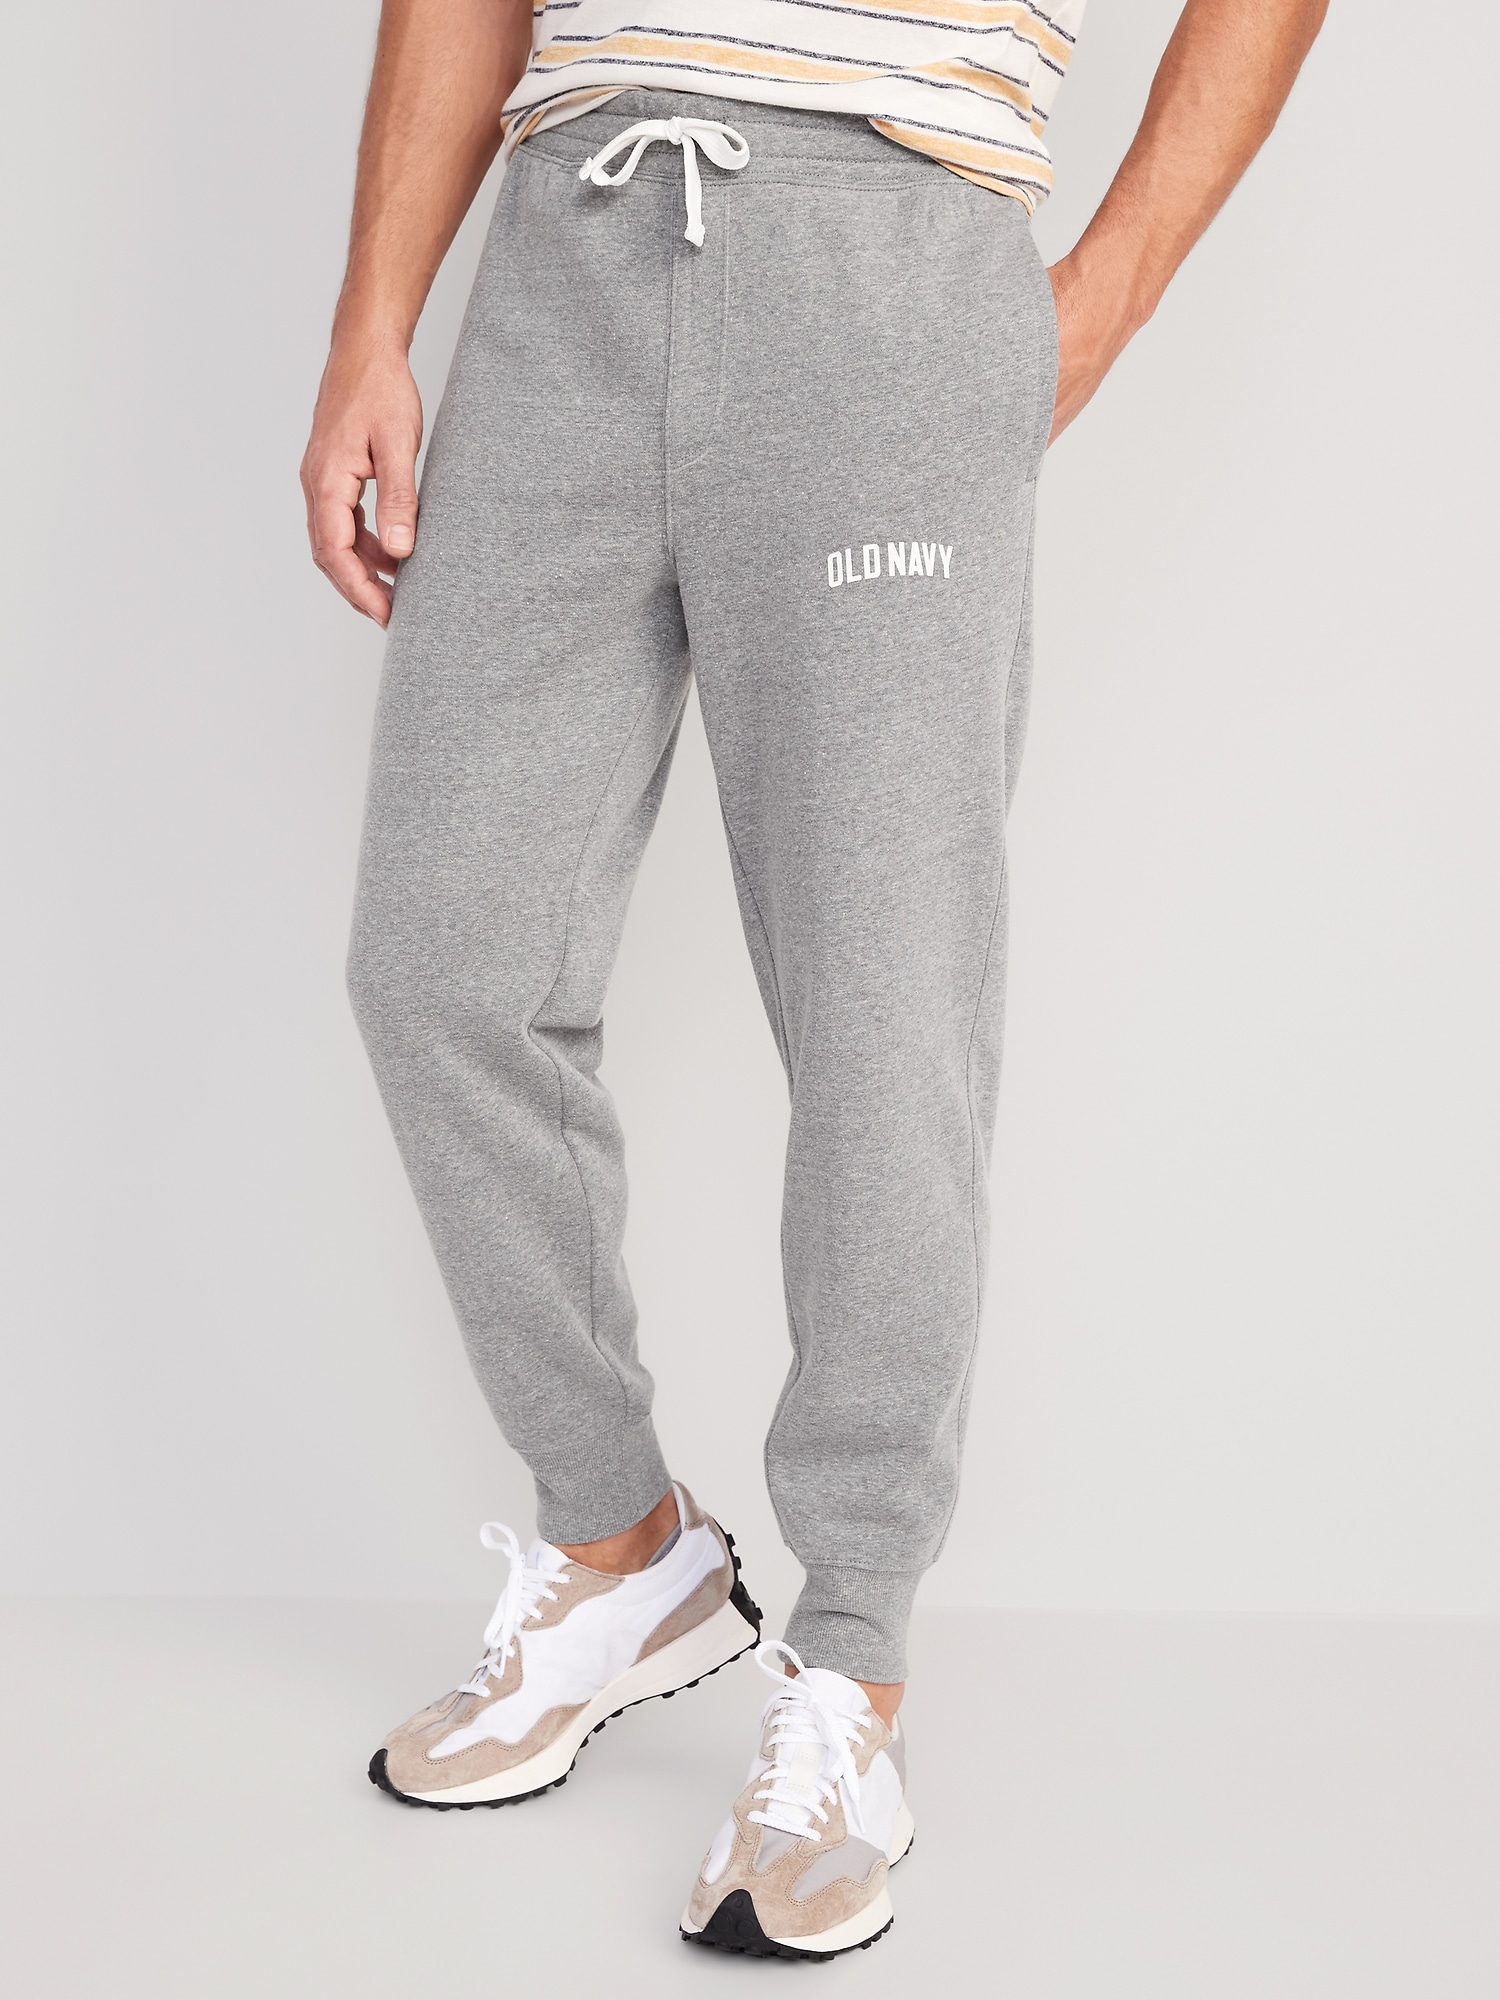 Old Navy Logo Jogger Sweatpants for Men gray - 409464102